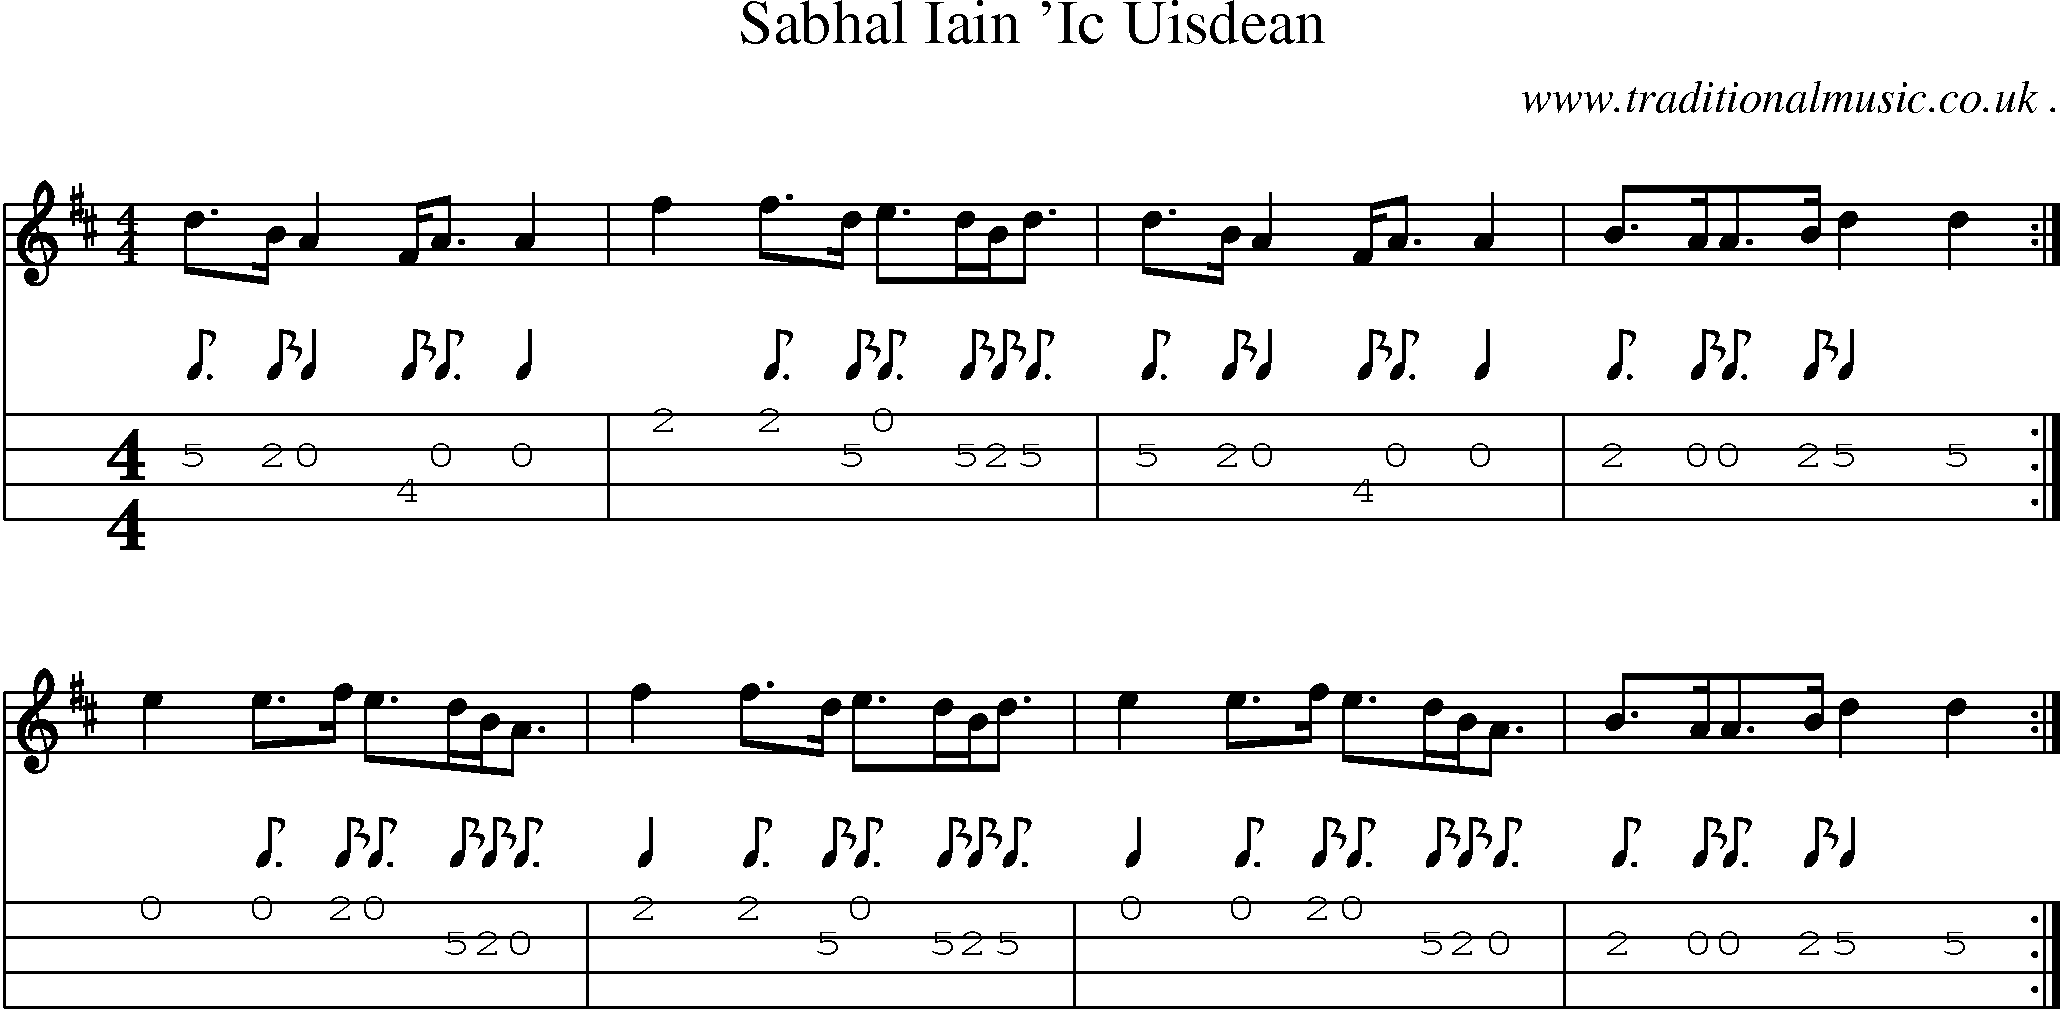 Sheet-music  score, Chords and Mandolin Tabs for Sabhal Iain Ic Uisdean